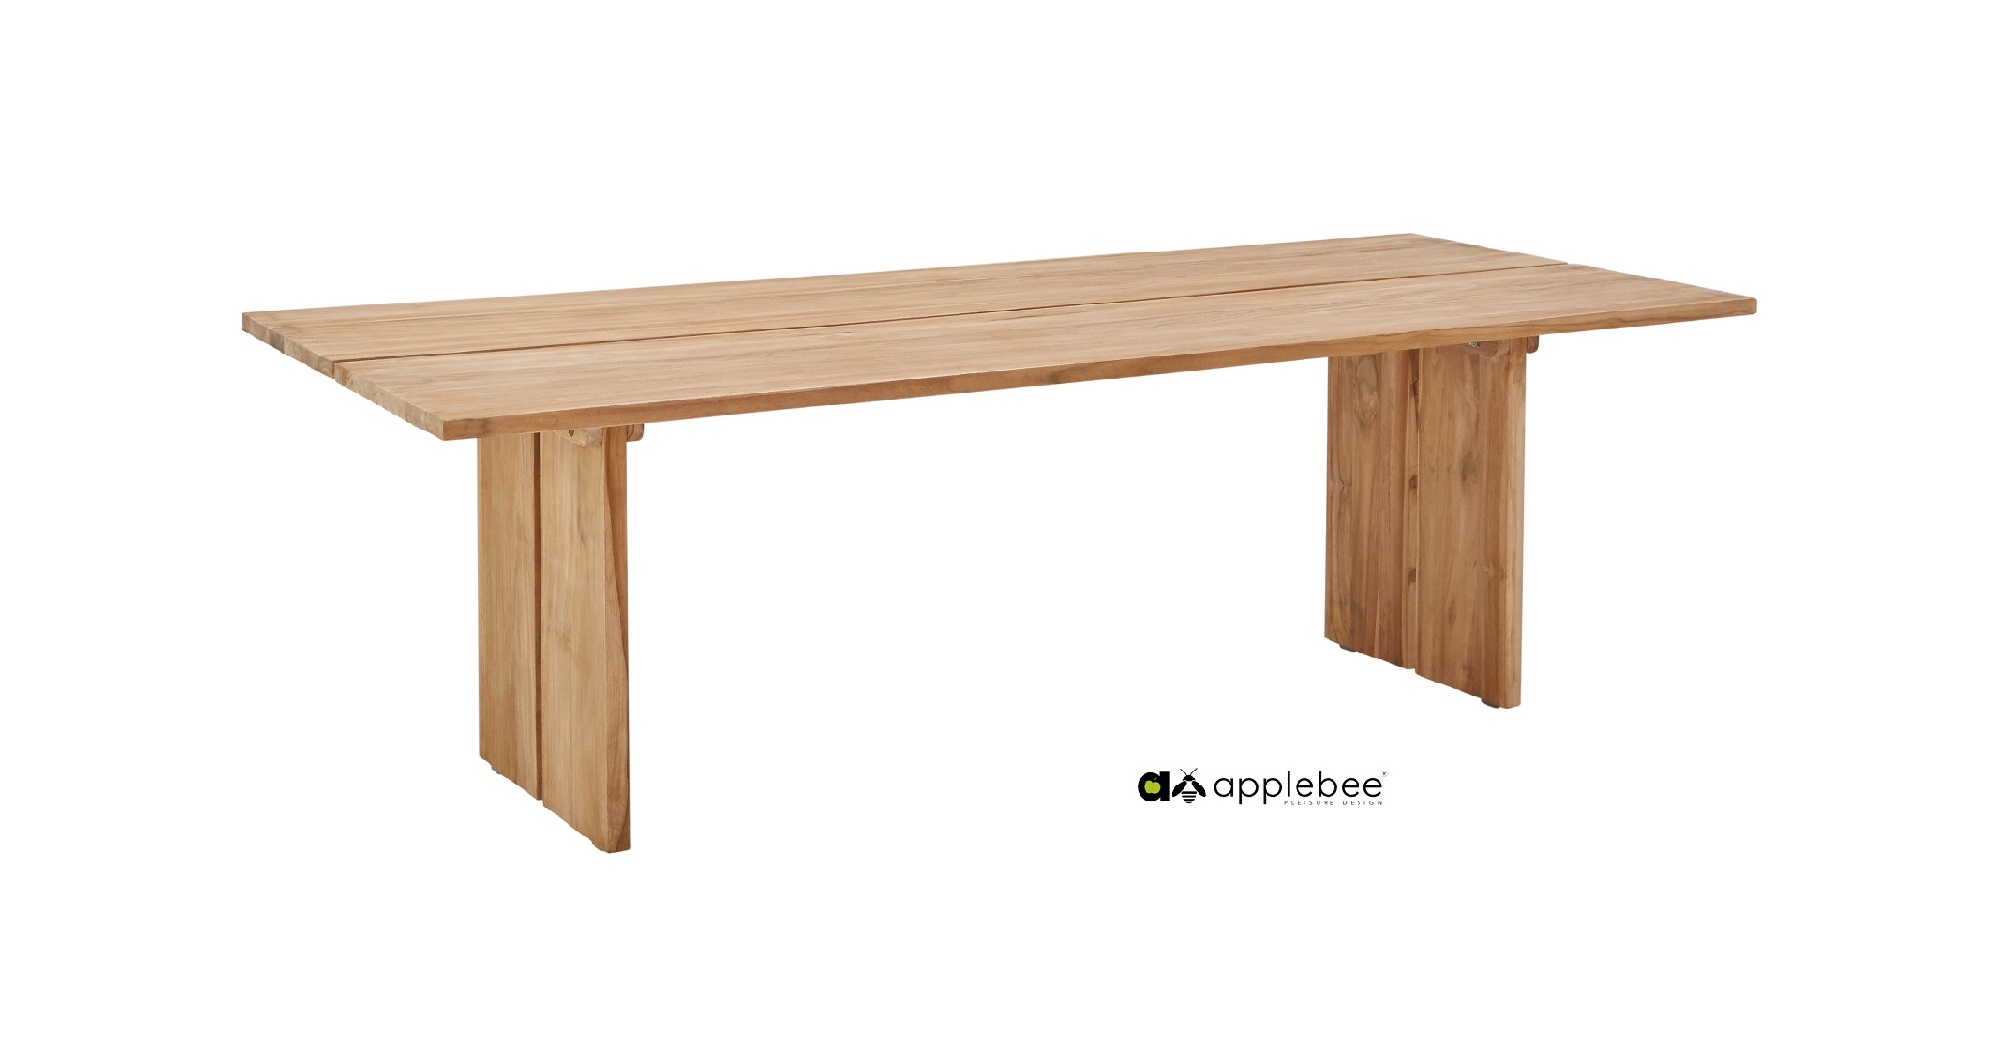 Applebee de Vivre tafel 250 cm » Alloutdoor Shop